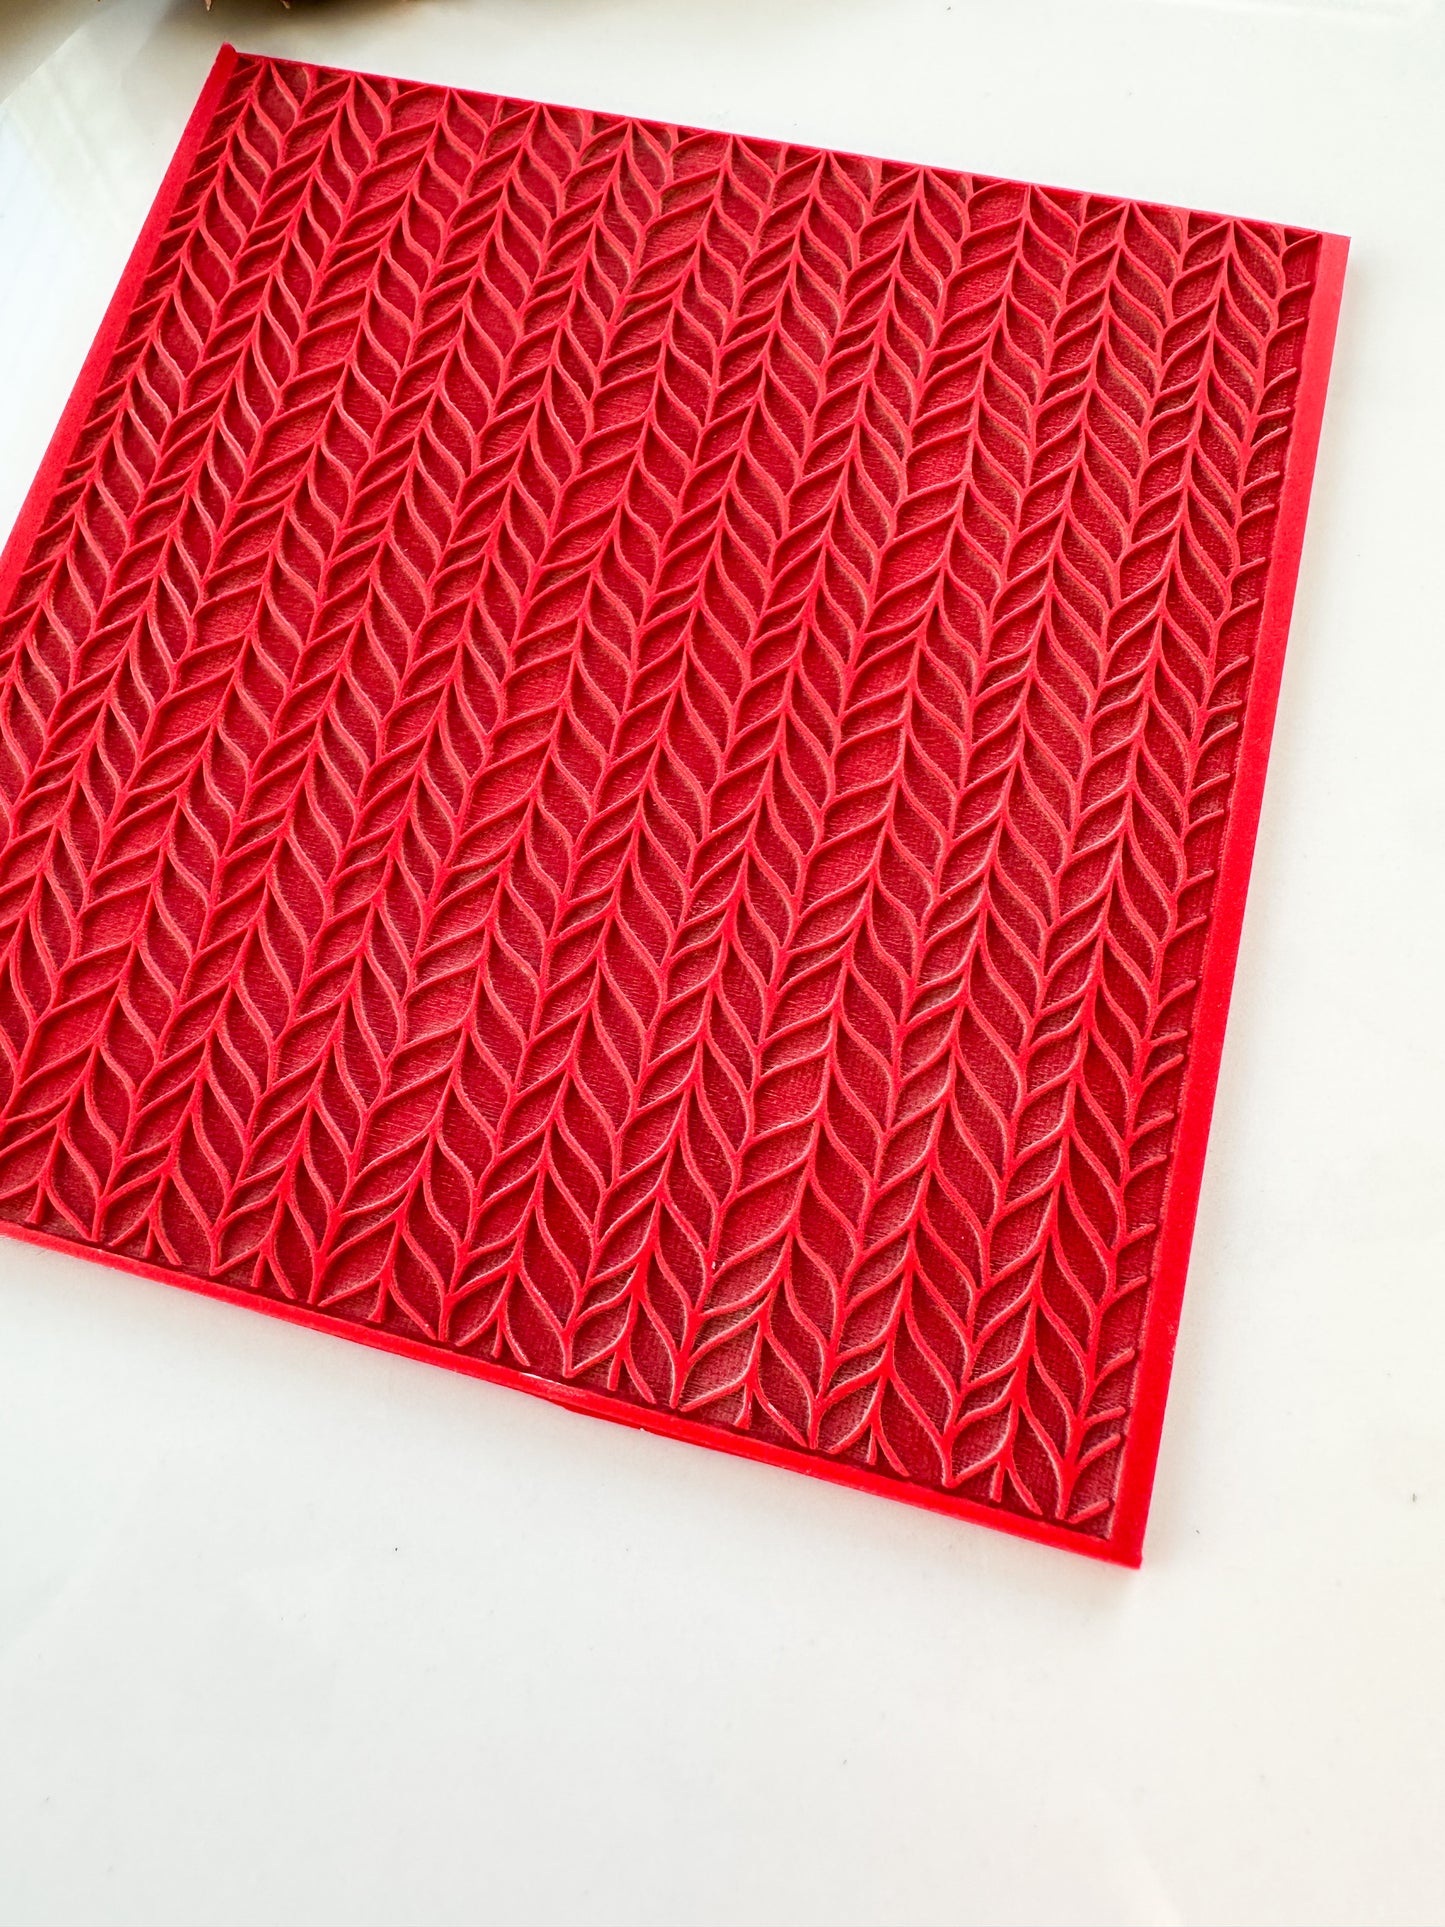 Braided Knit Clay Texture Mat